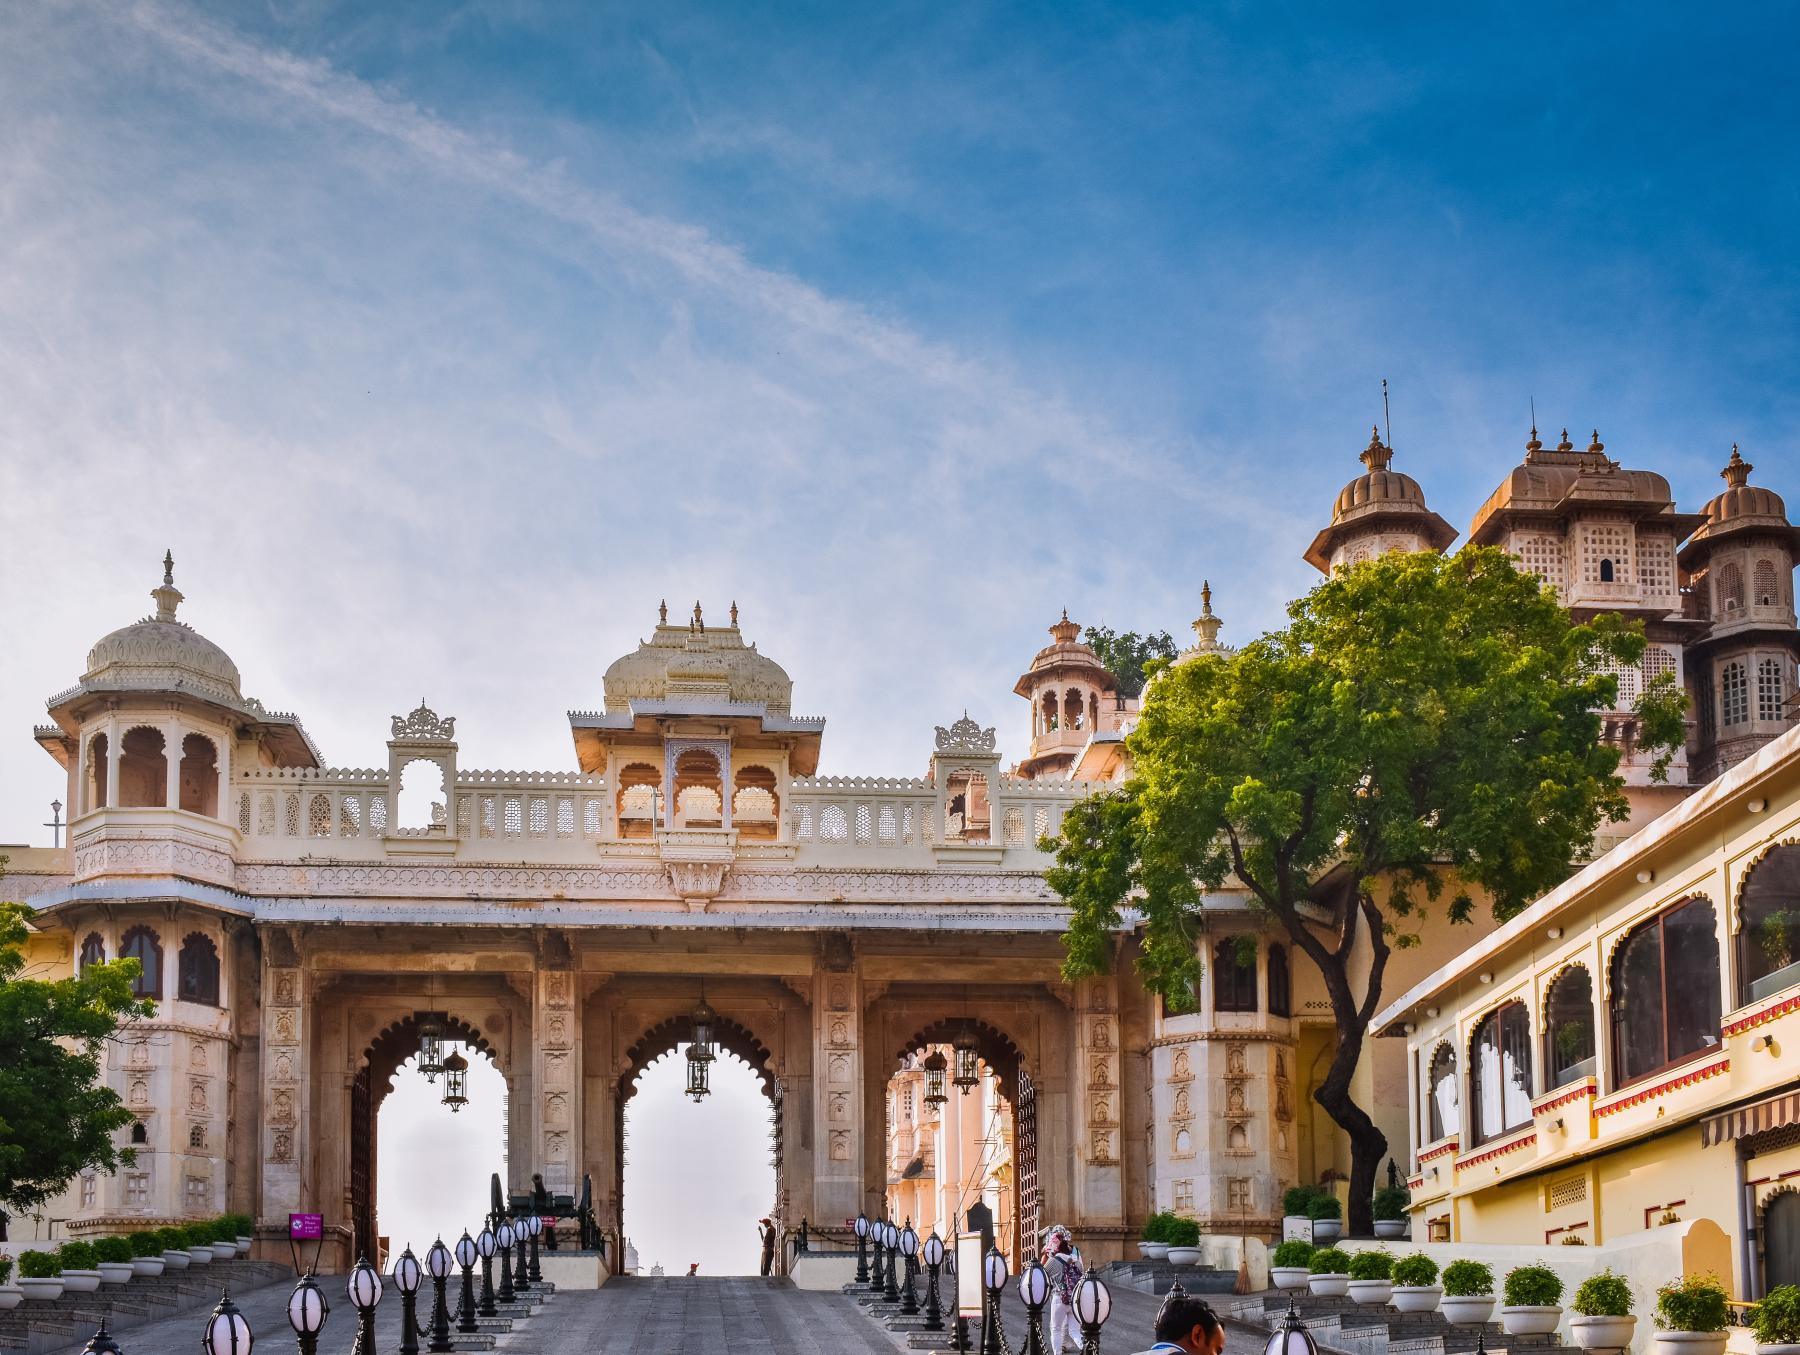 Udaipur City Palace, Rajasthan